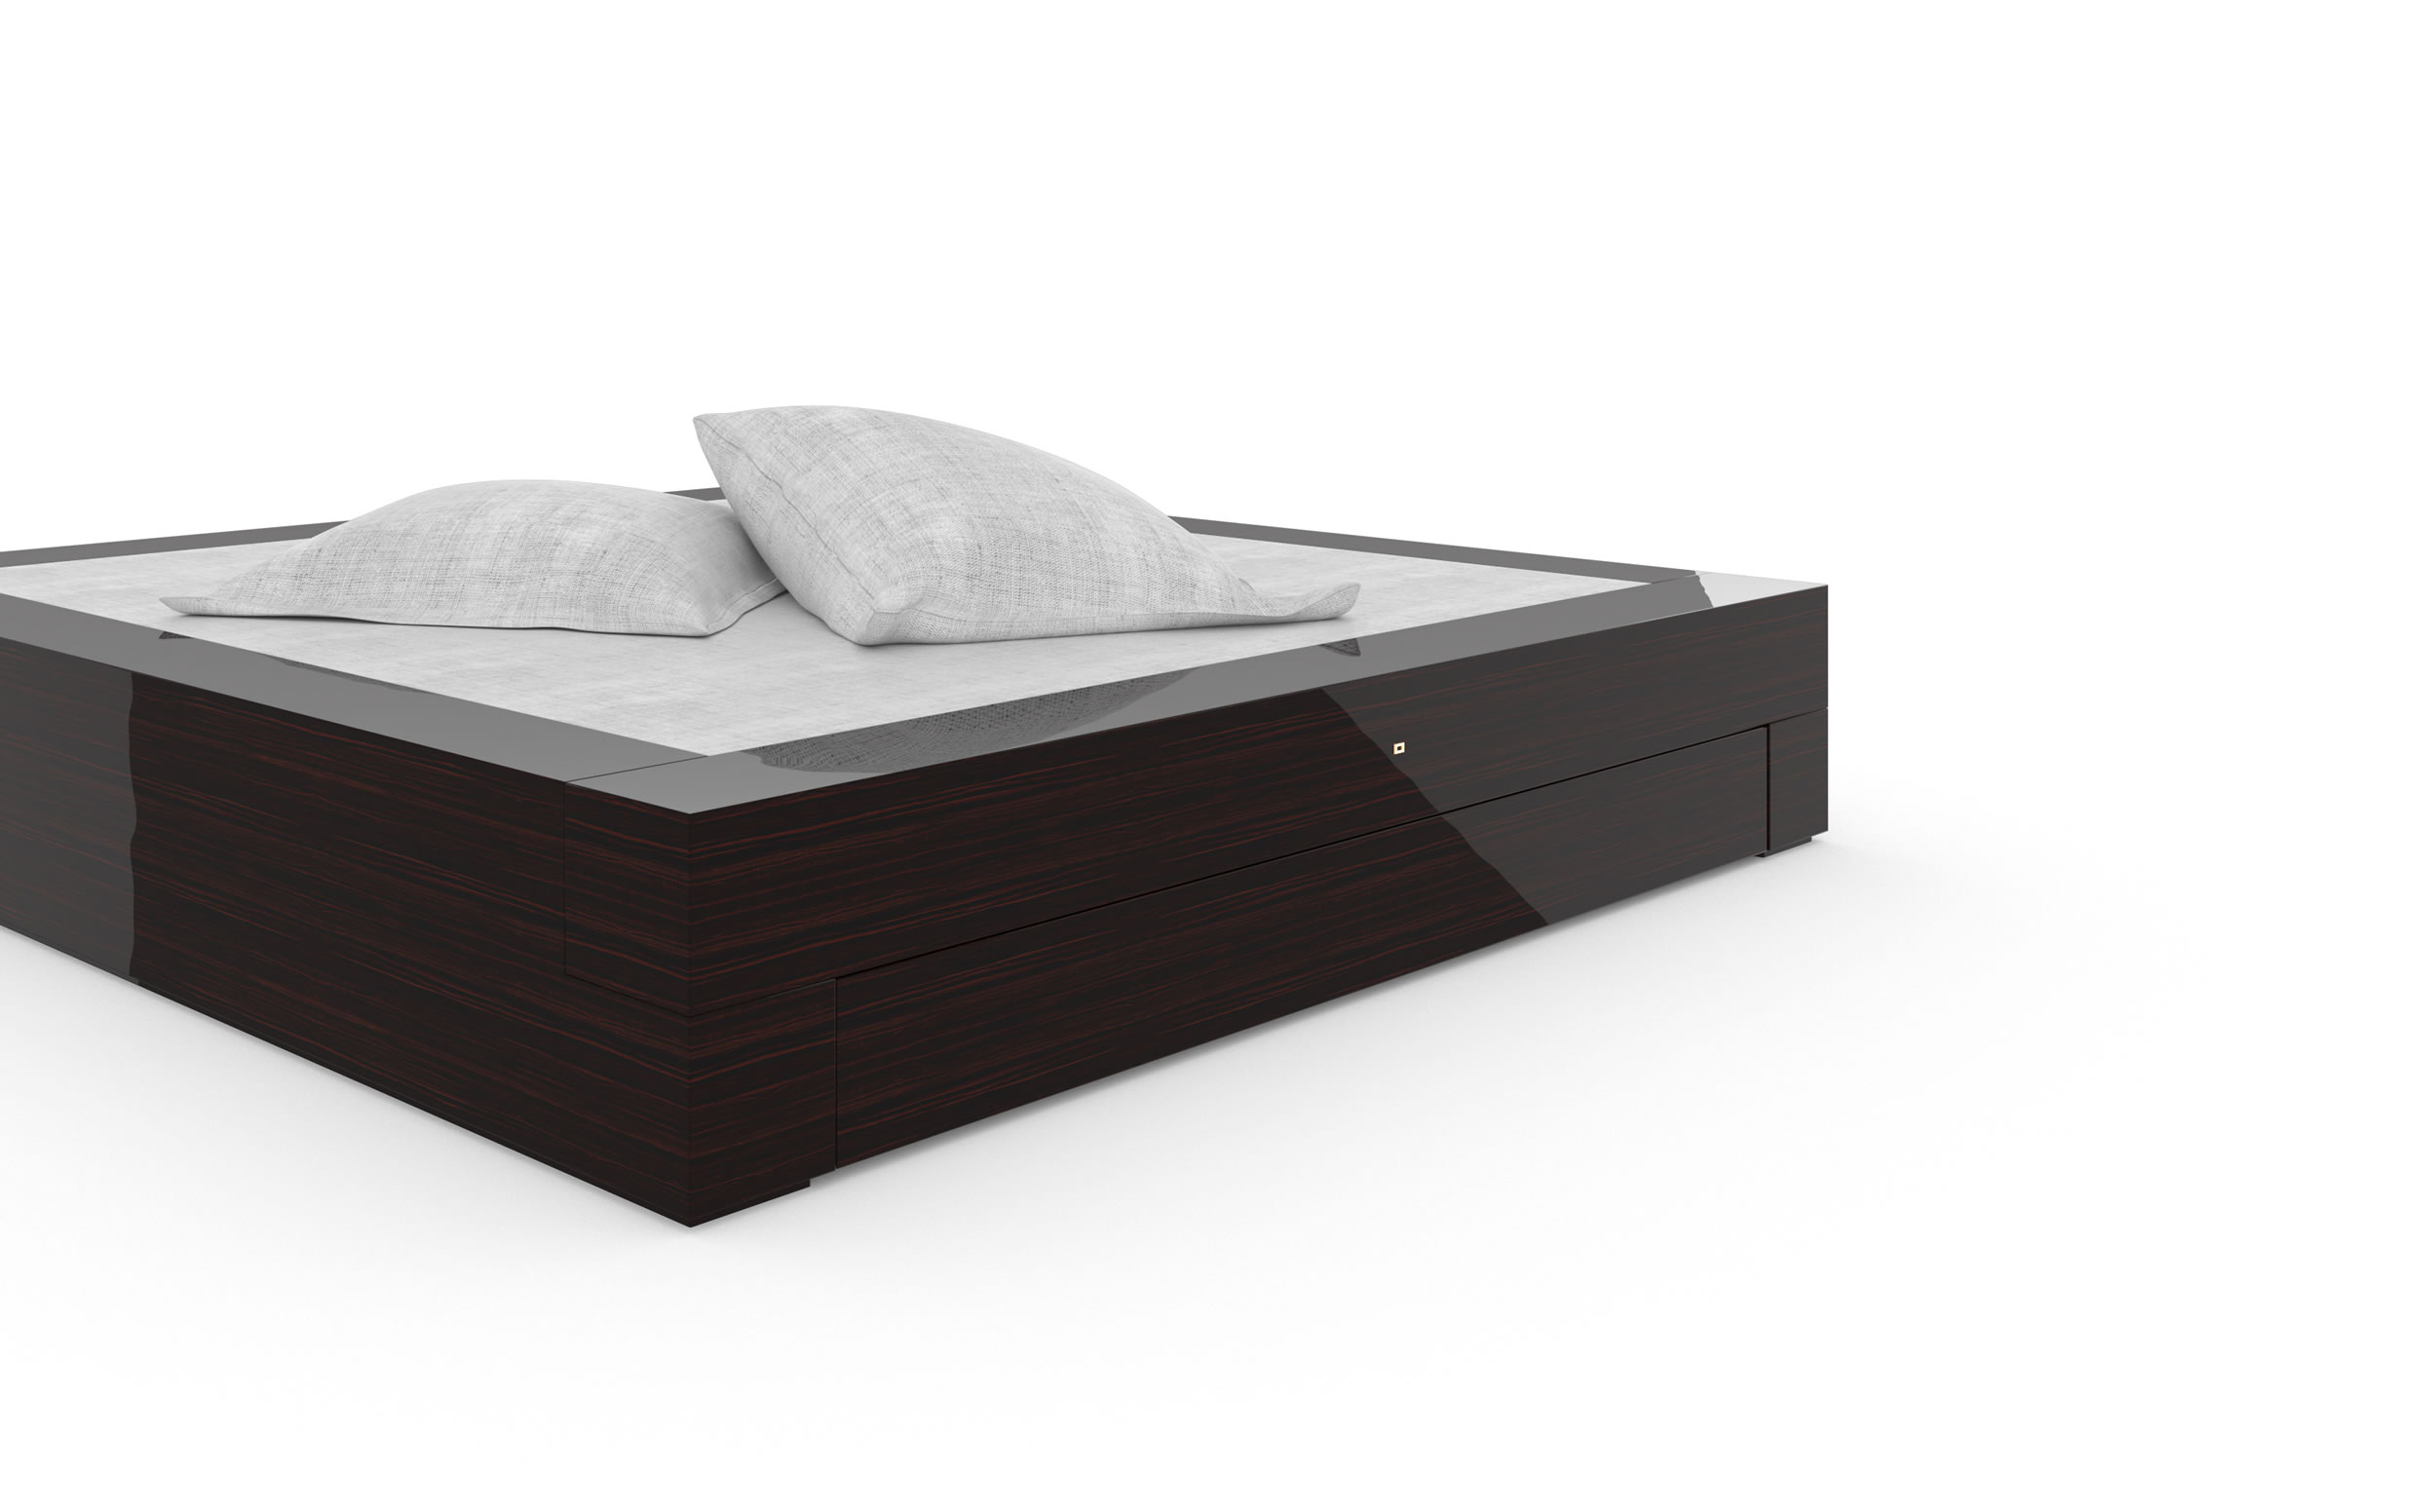 Design Bed Drawers Makassar Ebony Refined Handcrafted Purist Luxury InteriorFELIX SCHWAKE